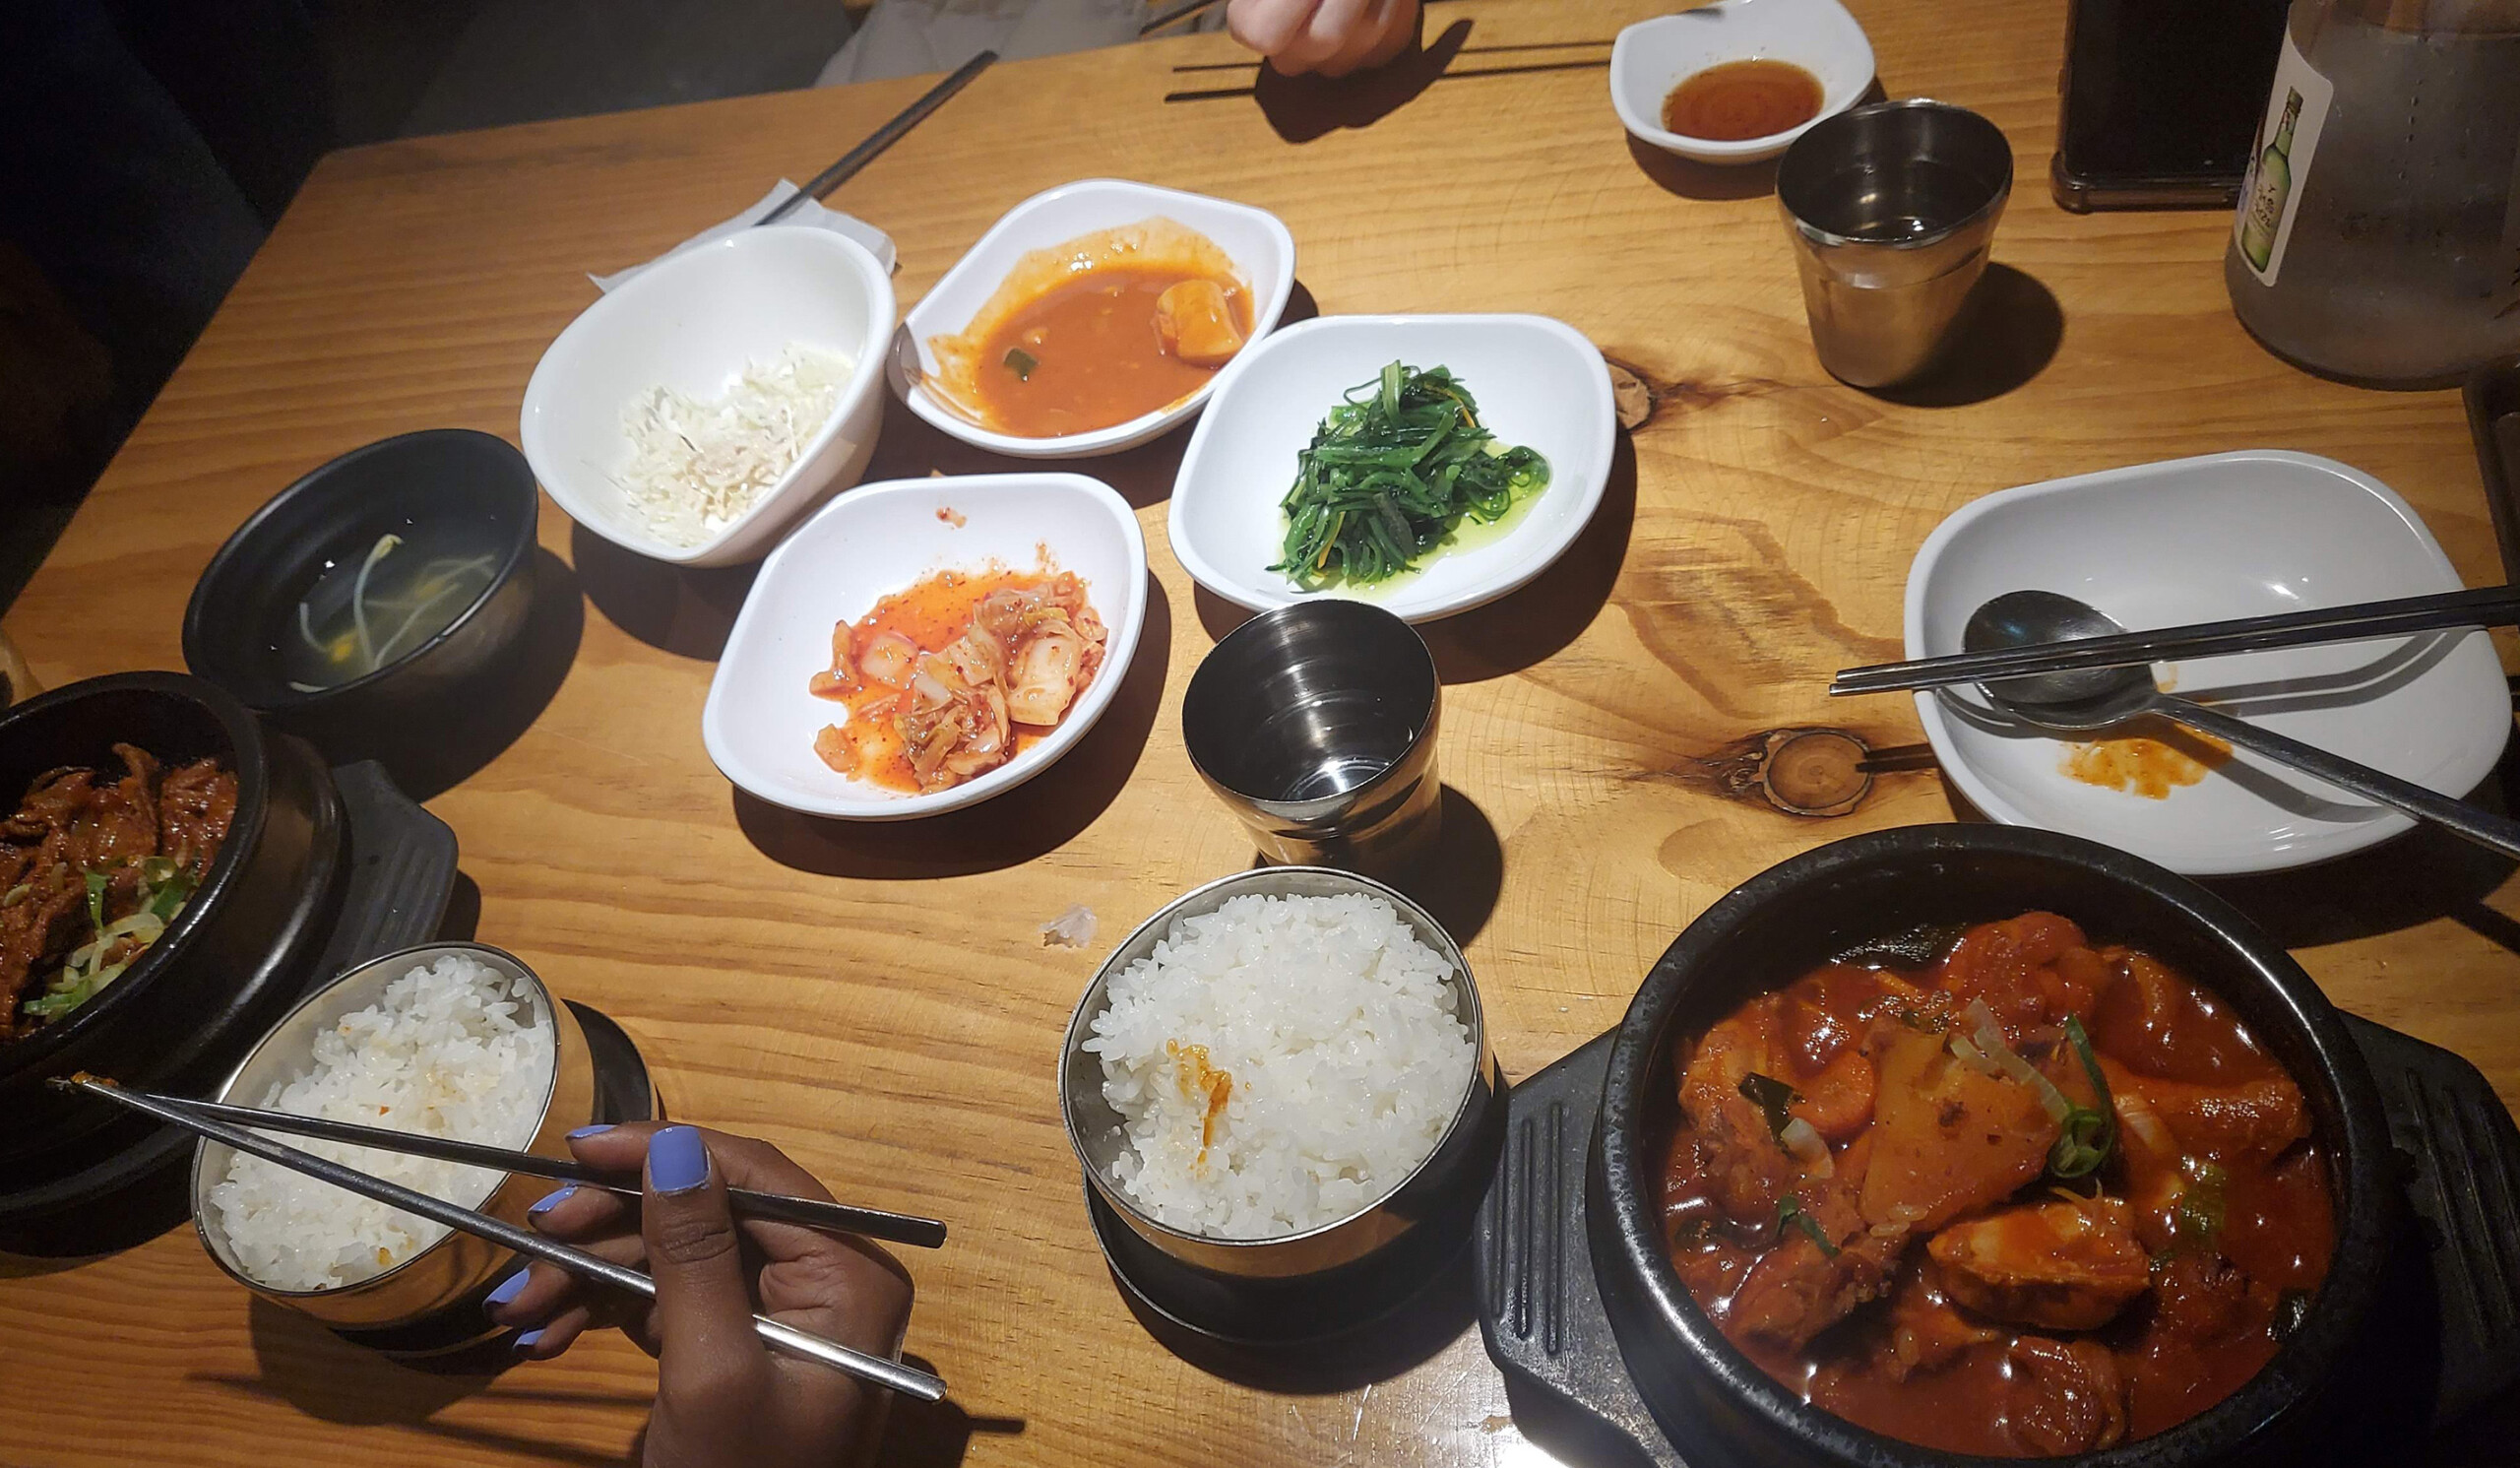 Spicy stewed chicken from Okduheon Handmade Tofu (옥두헌손두부).